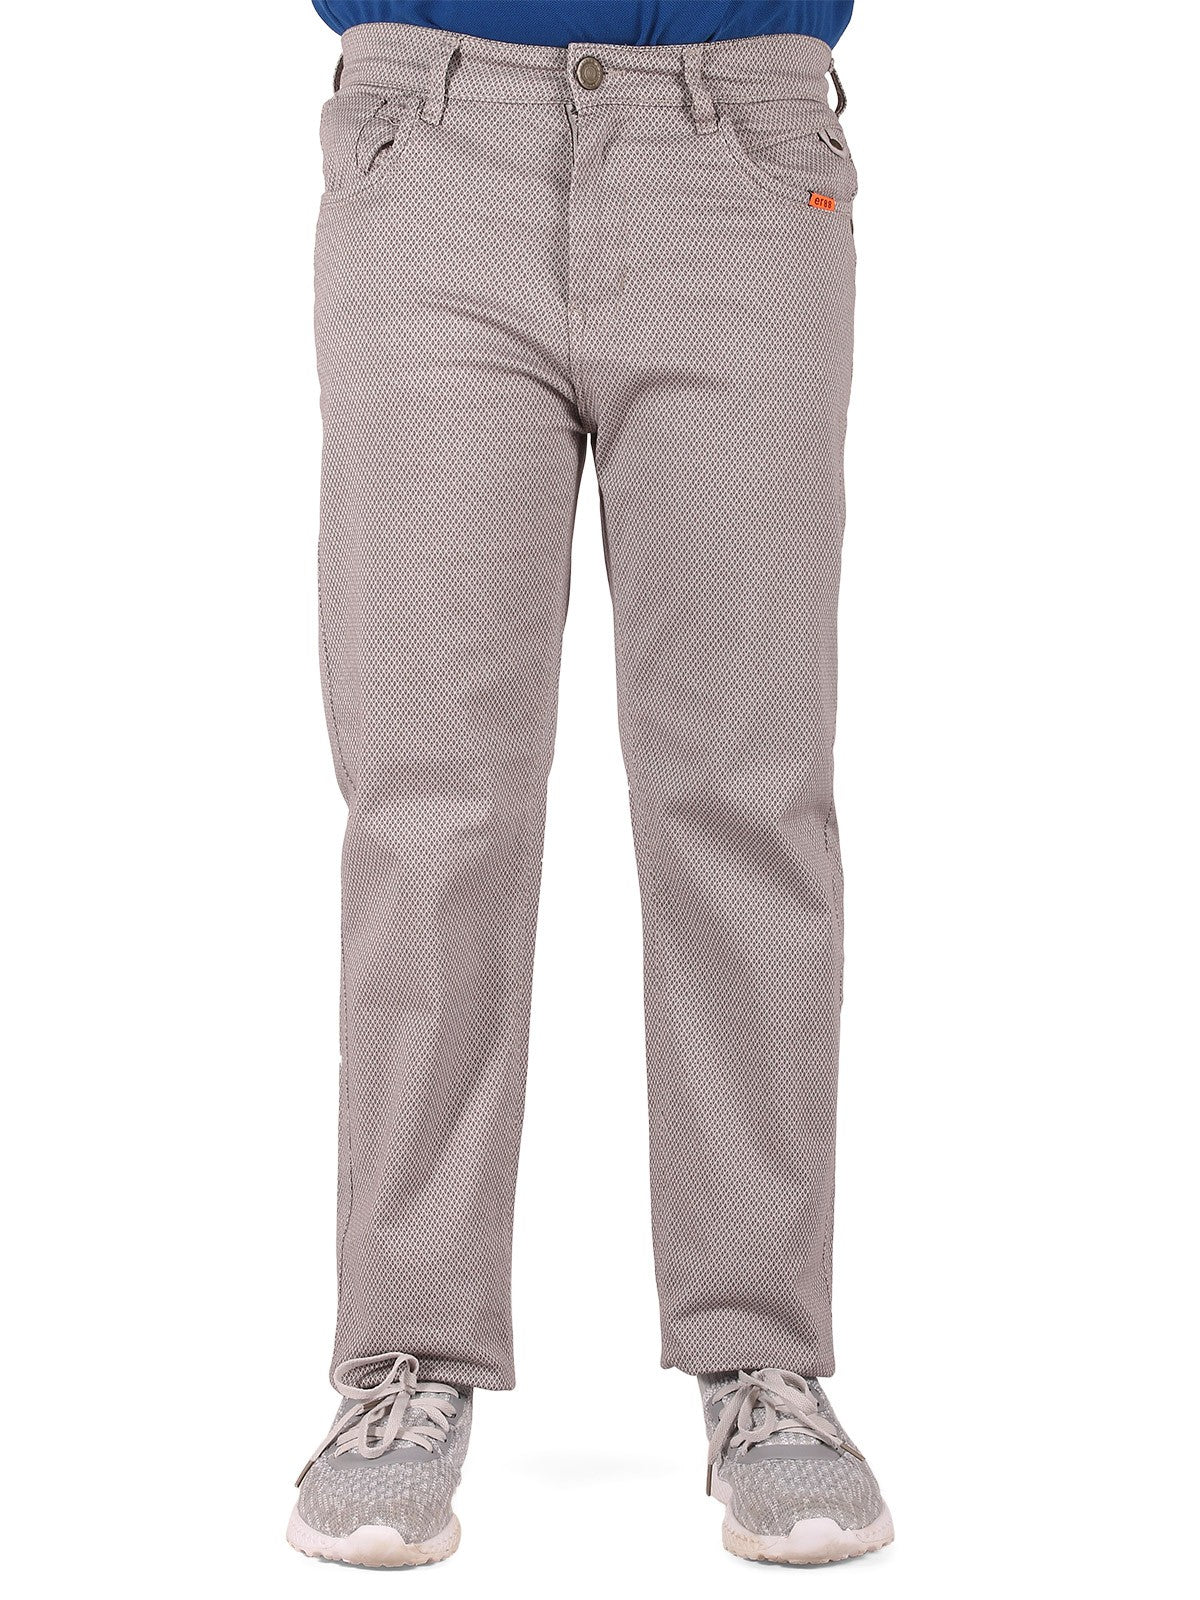 Boy's Grey Chino Pant - EBBCP19-004